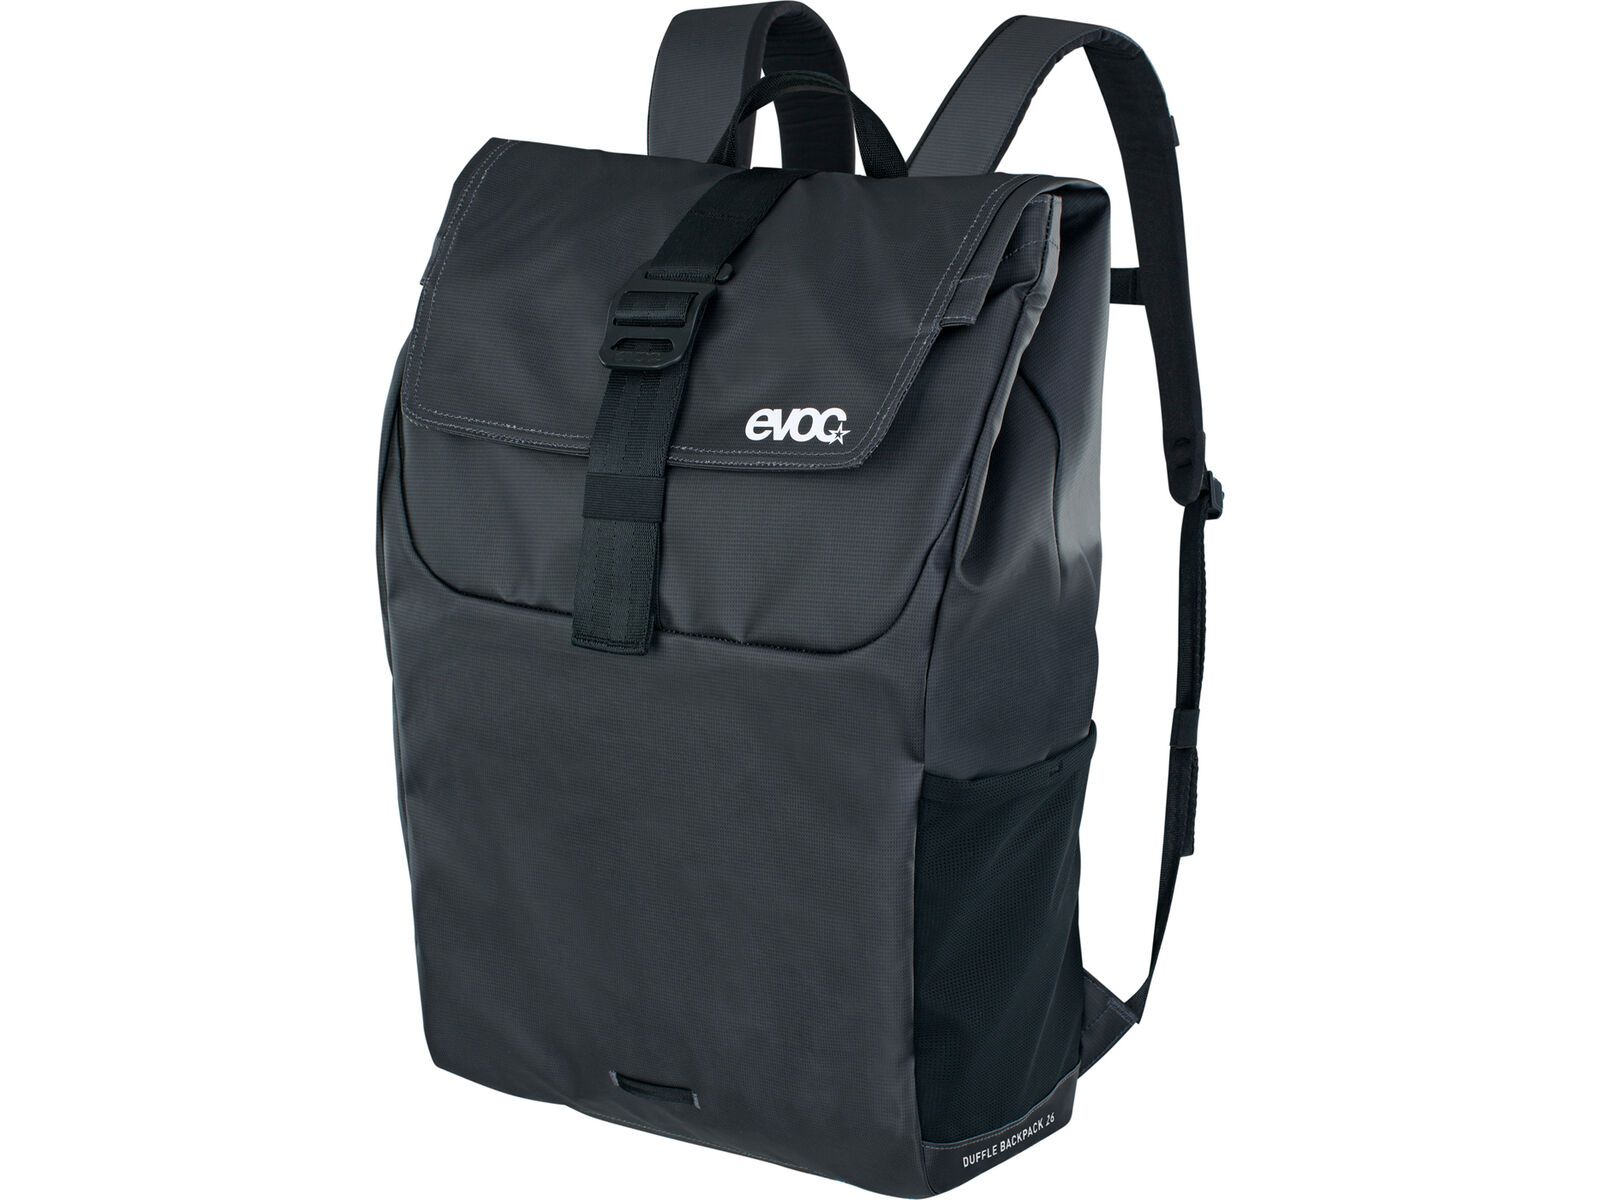 Evoc Duffle Backpack 26, carbon grey/black | Bild 1